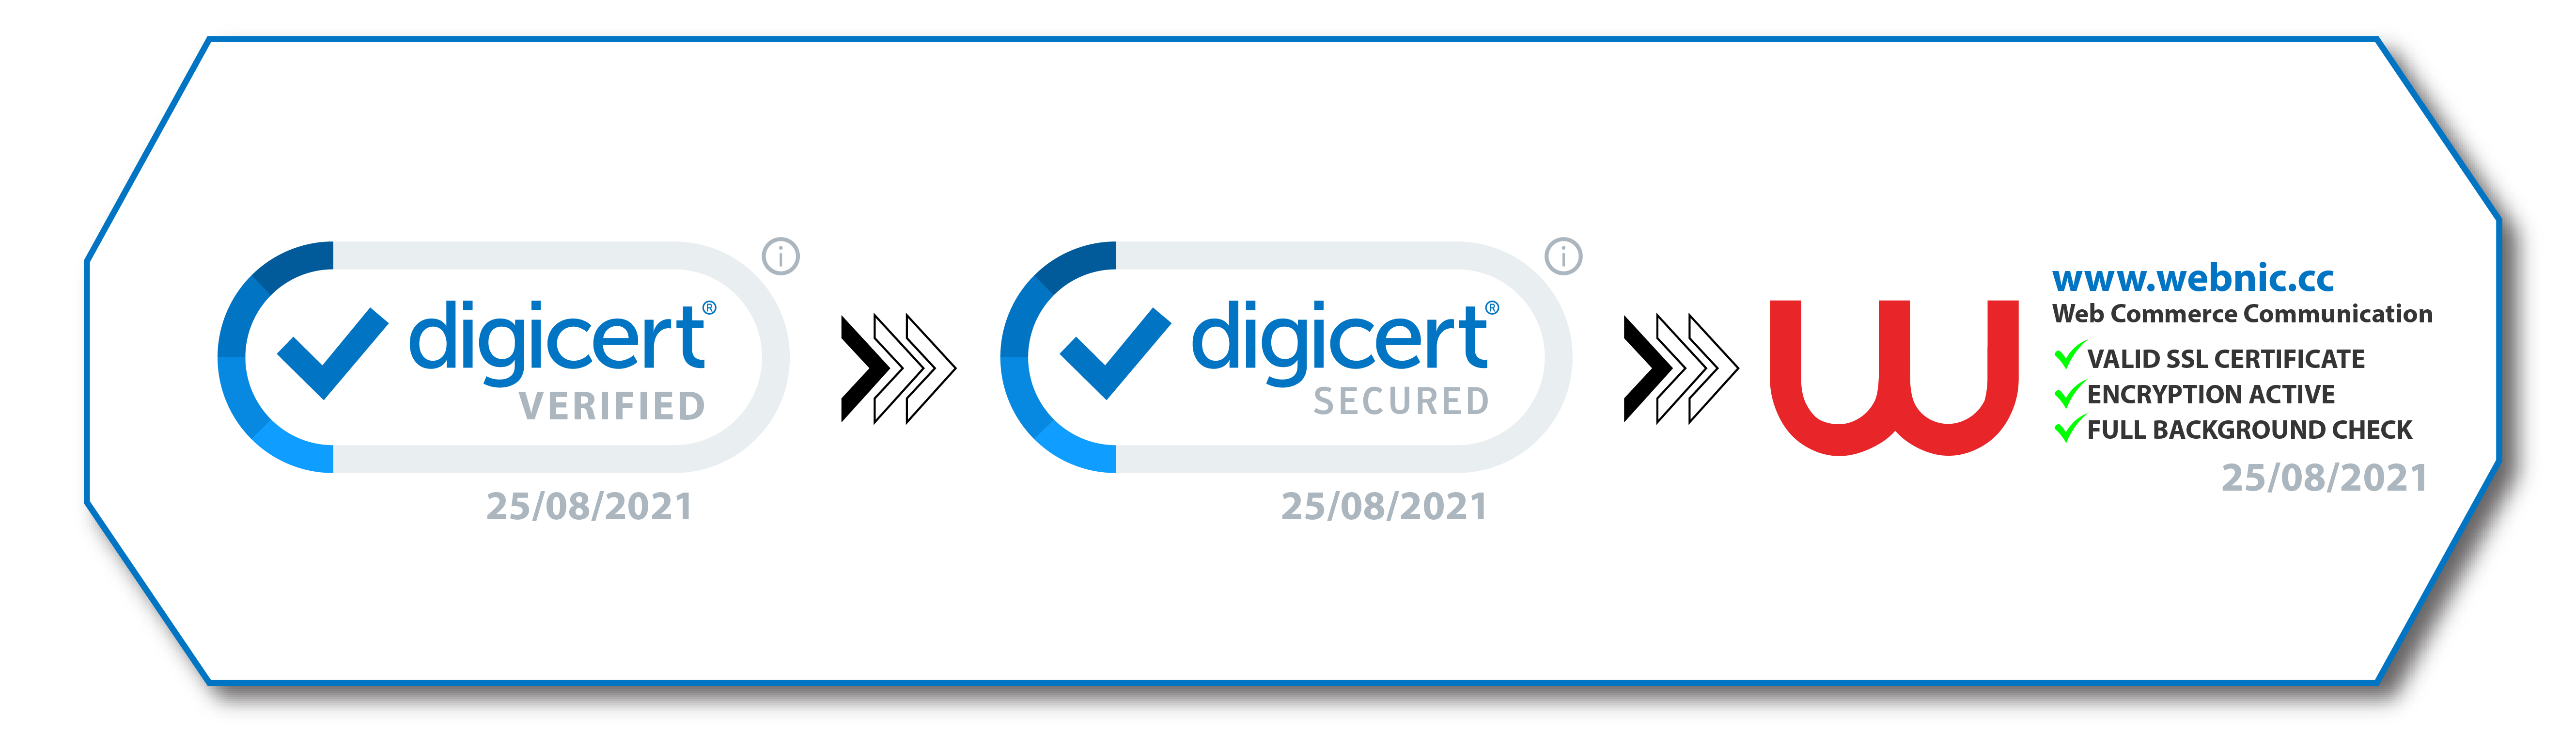 DigiCert Smart Seal - ตราประทับ SSL บนเว็บไซต์ที่ปลอดภัย 4